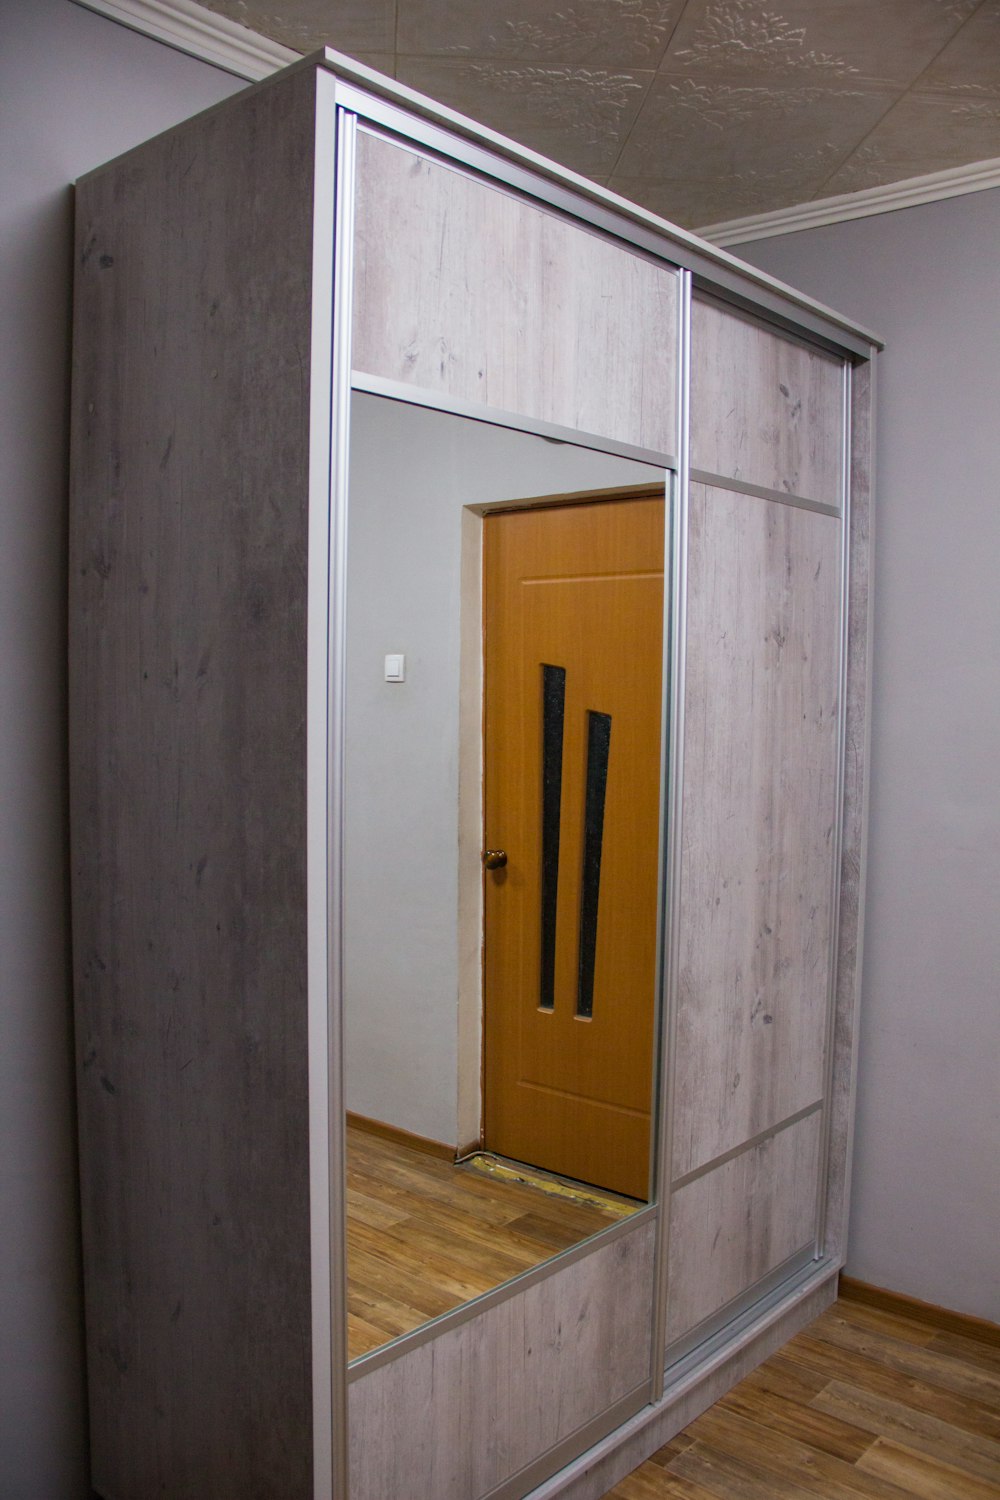 a mirror reflecting a door in a room